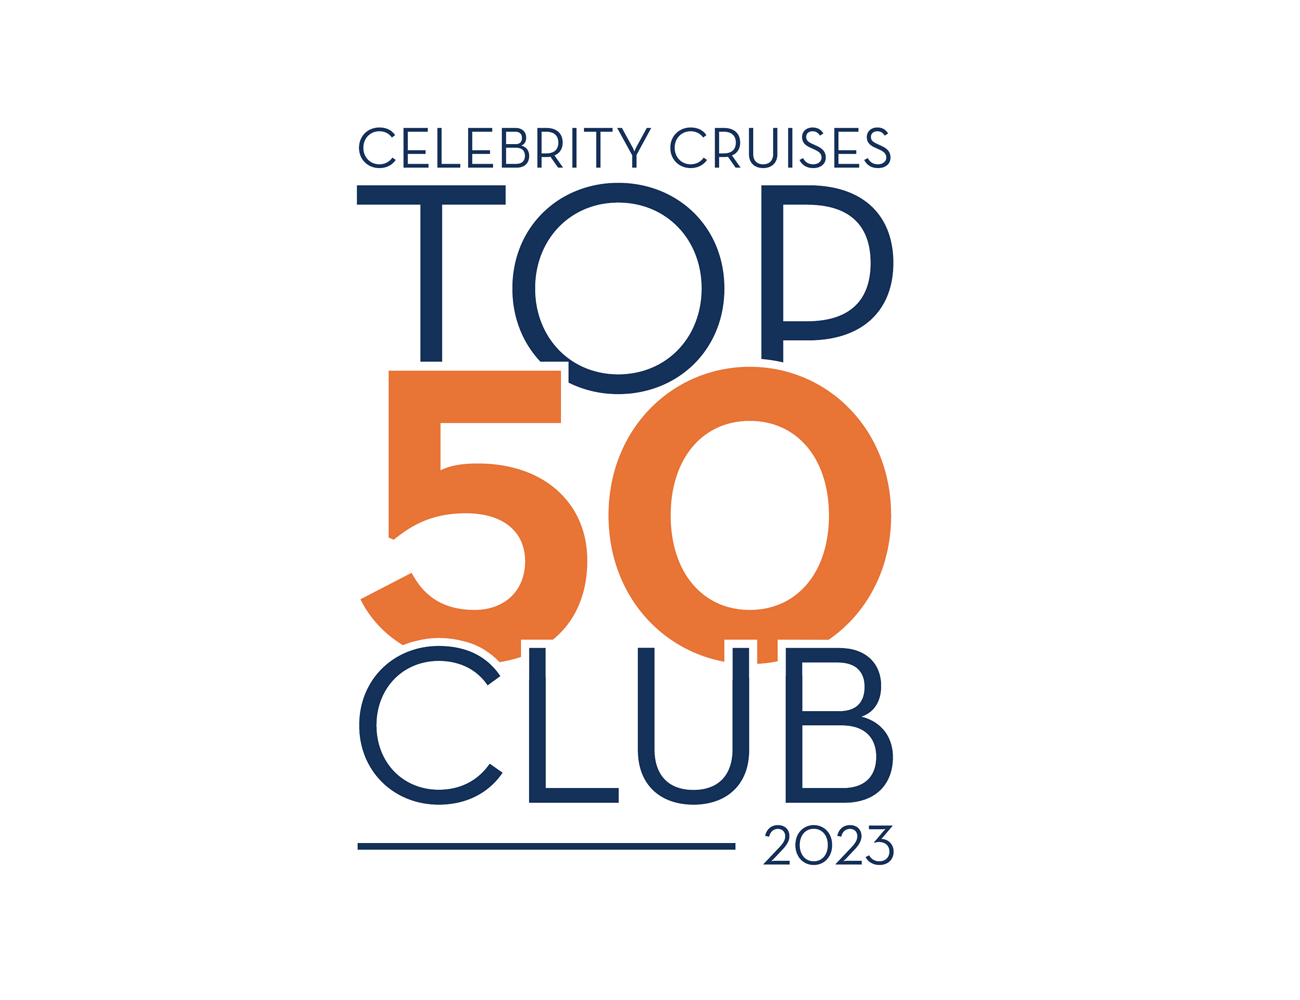 WorldVia Reaches Celebrity Cruises’ Top 50 Club